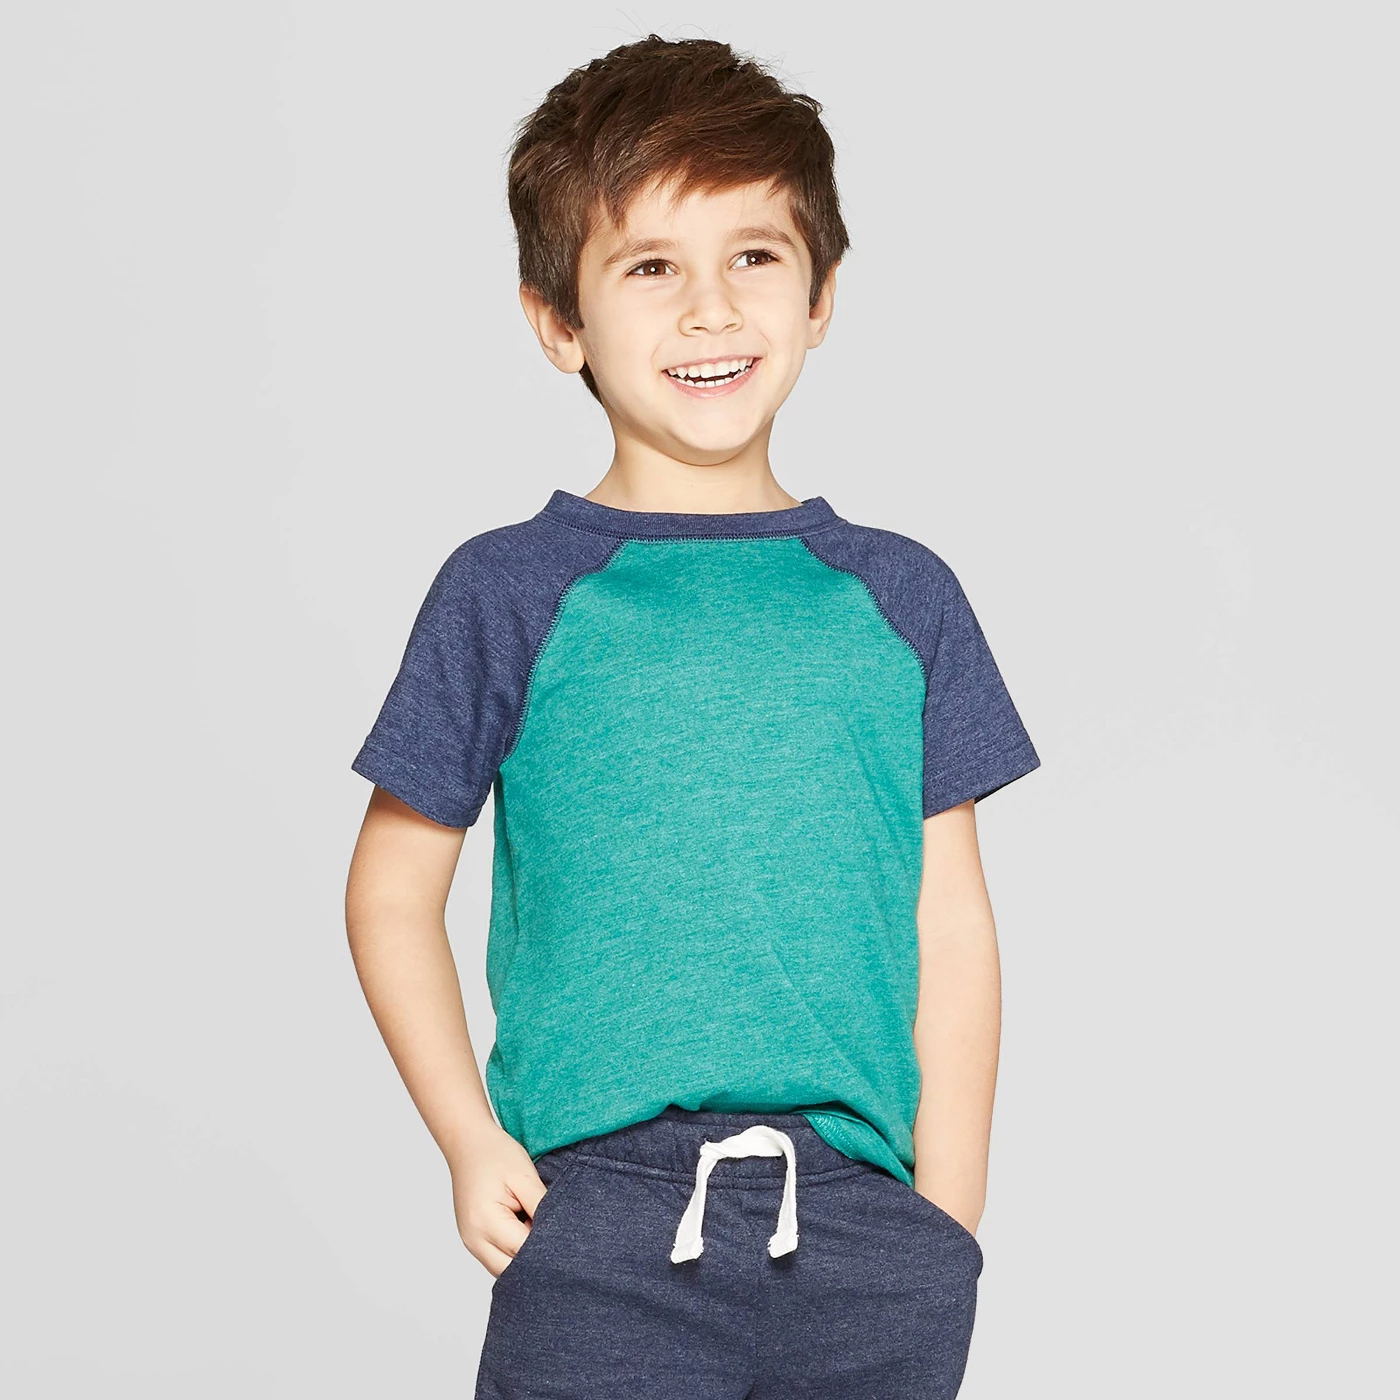 Toddler Boys' Raglan Short Sleeve T-Shirt - Cat & Jack™ Green/Navy - image 1 of 3